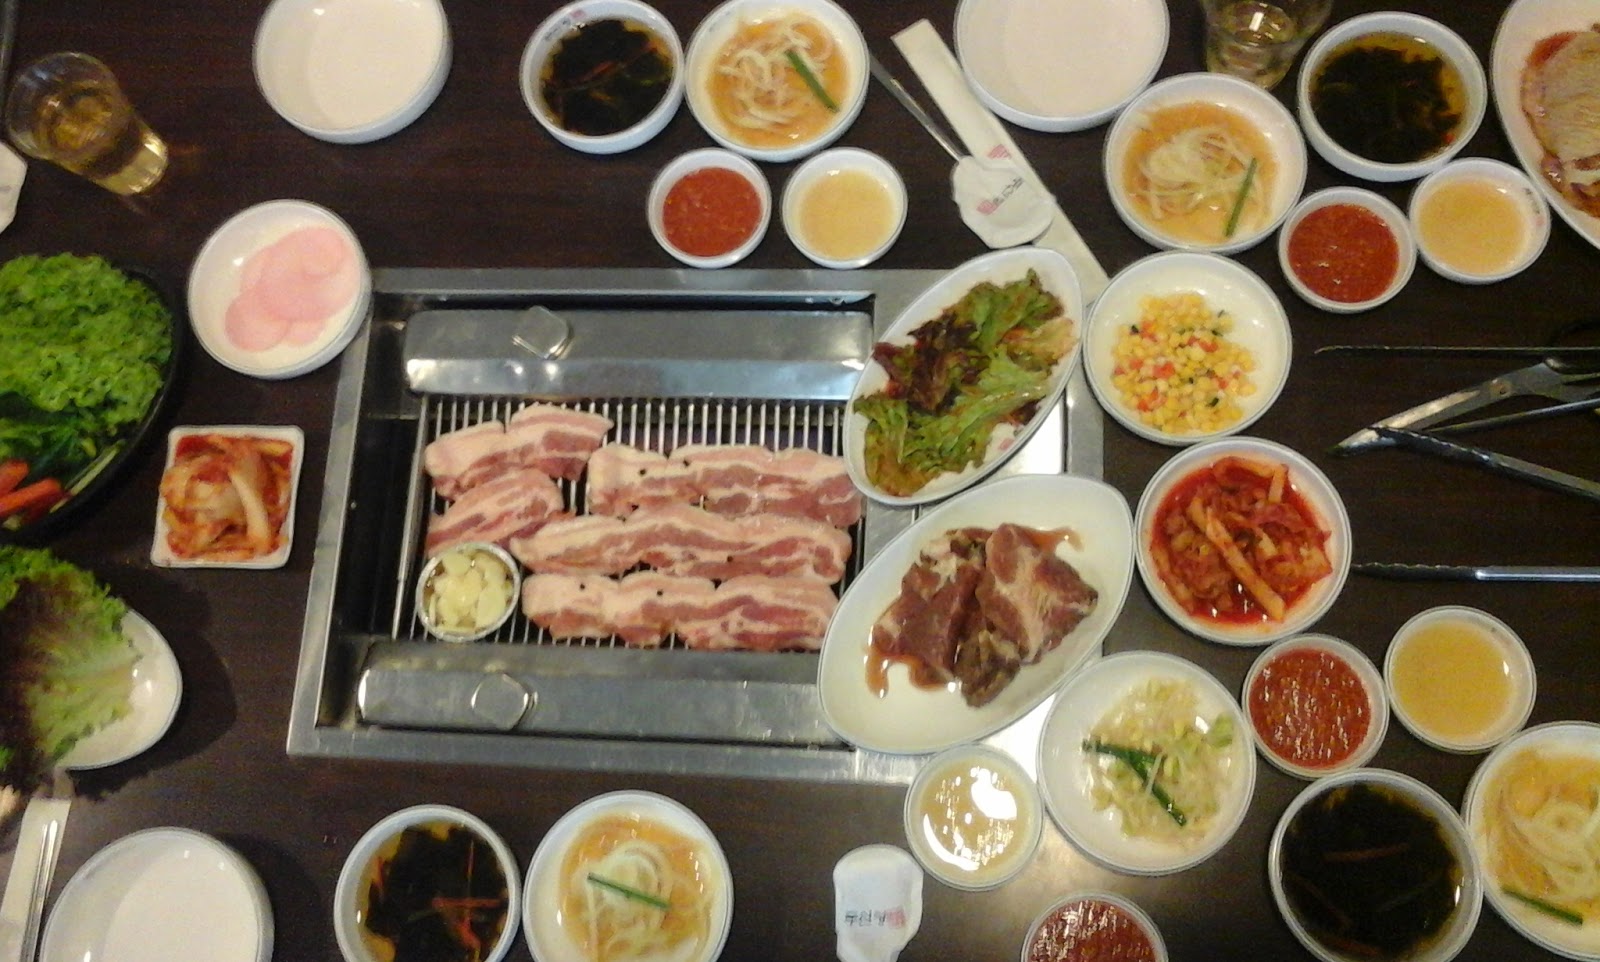 With Kids, We Go...: Korean BBQ Buffet @ Ju Shing Jung (East Coast Park)